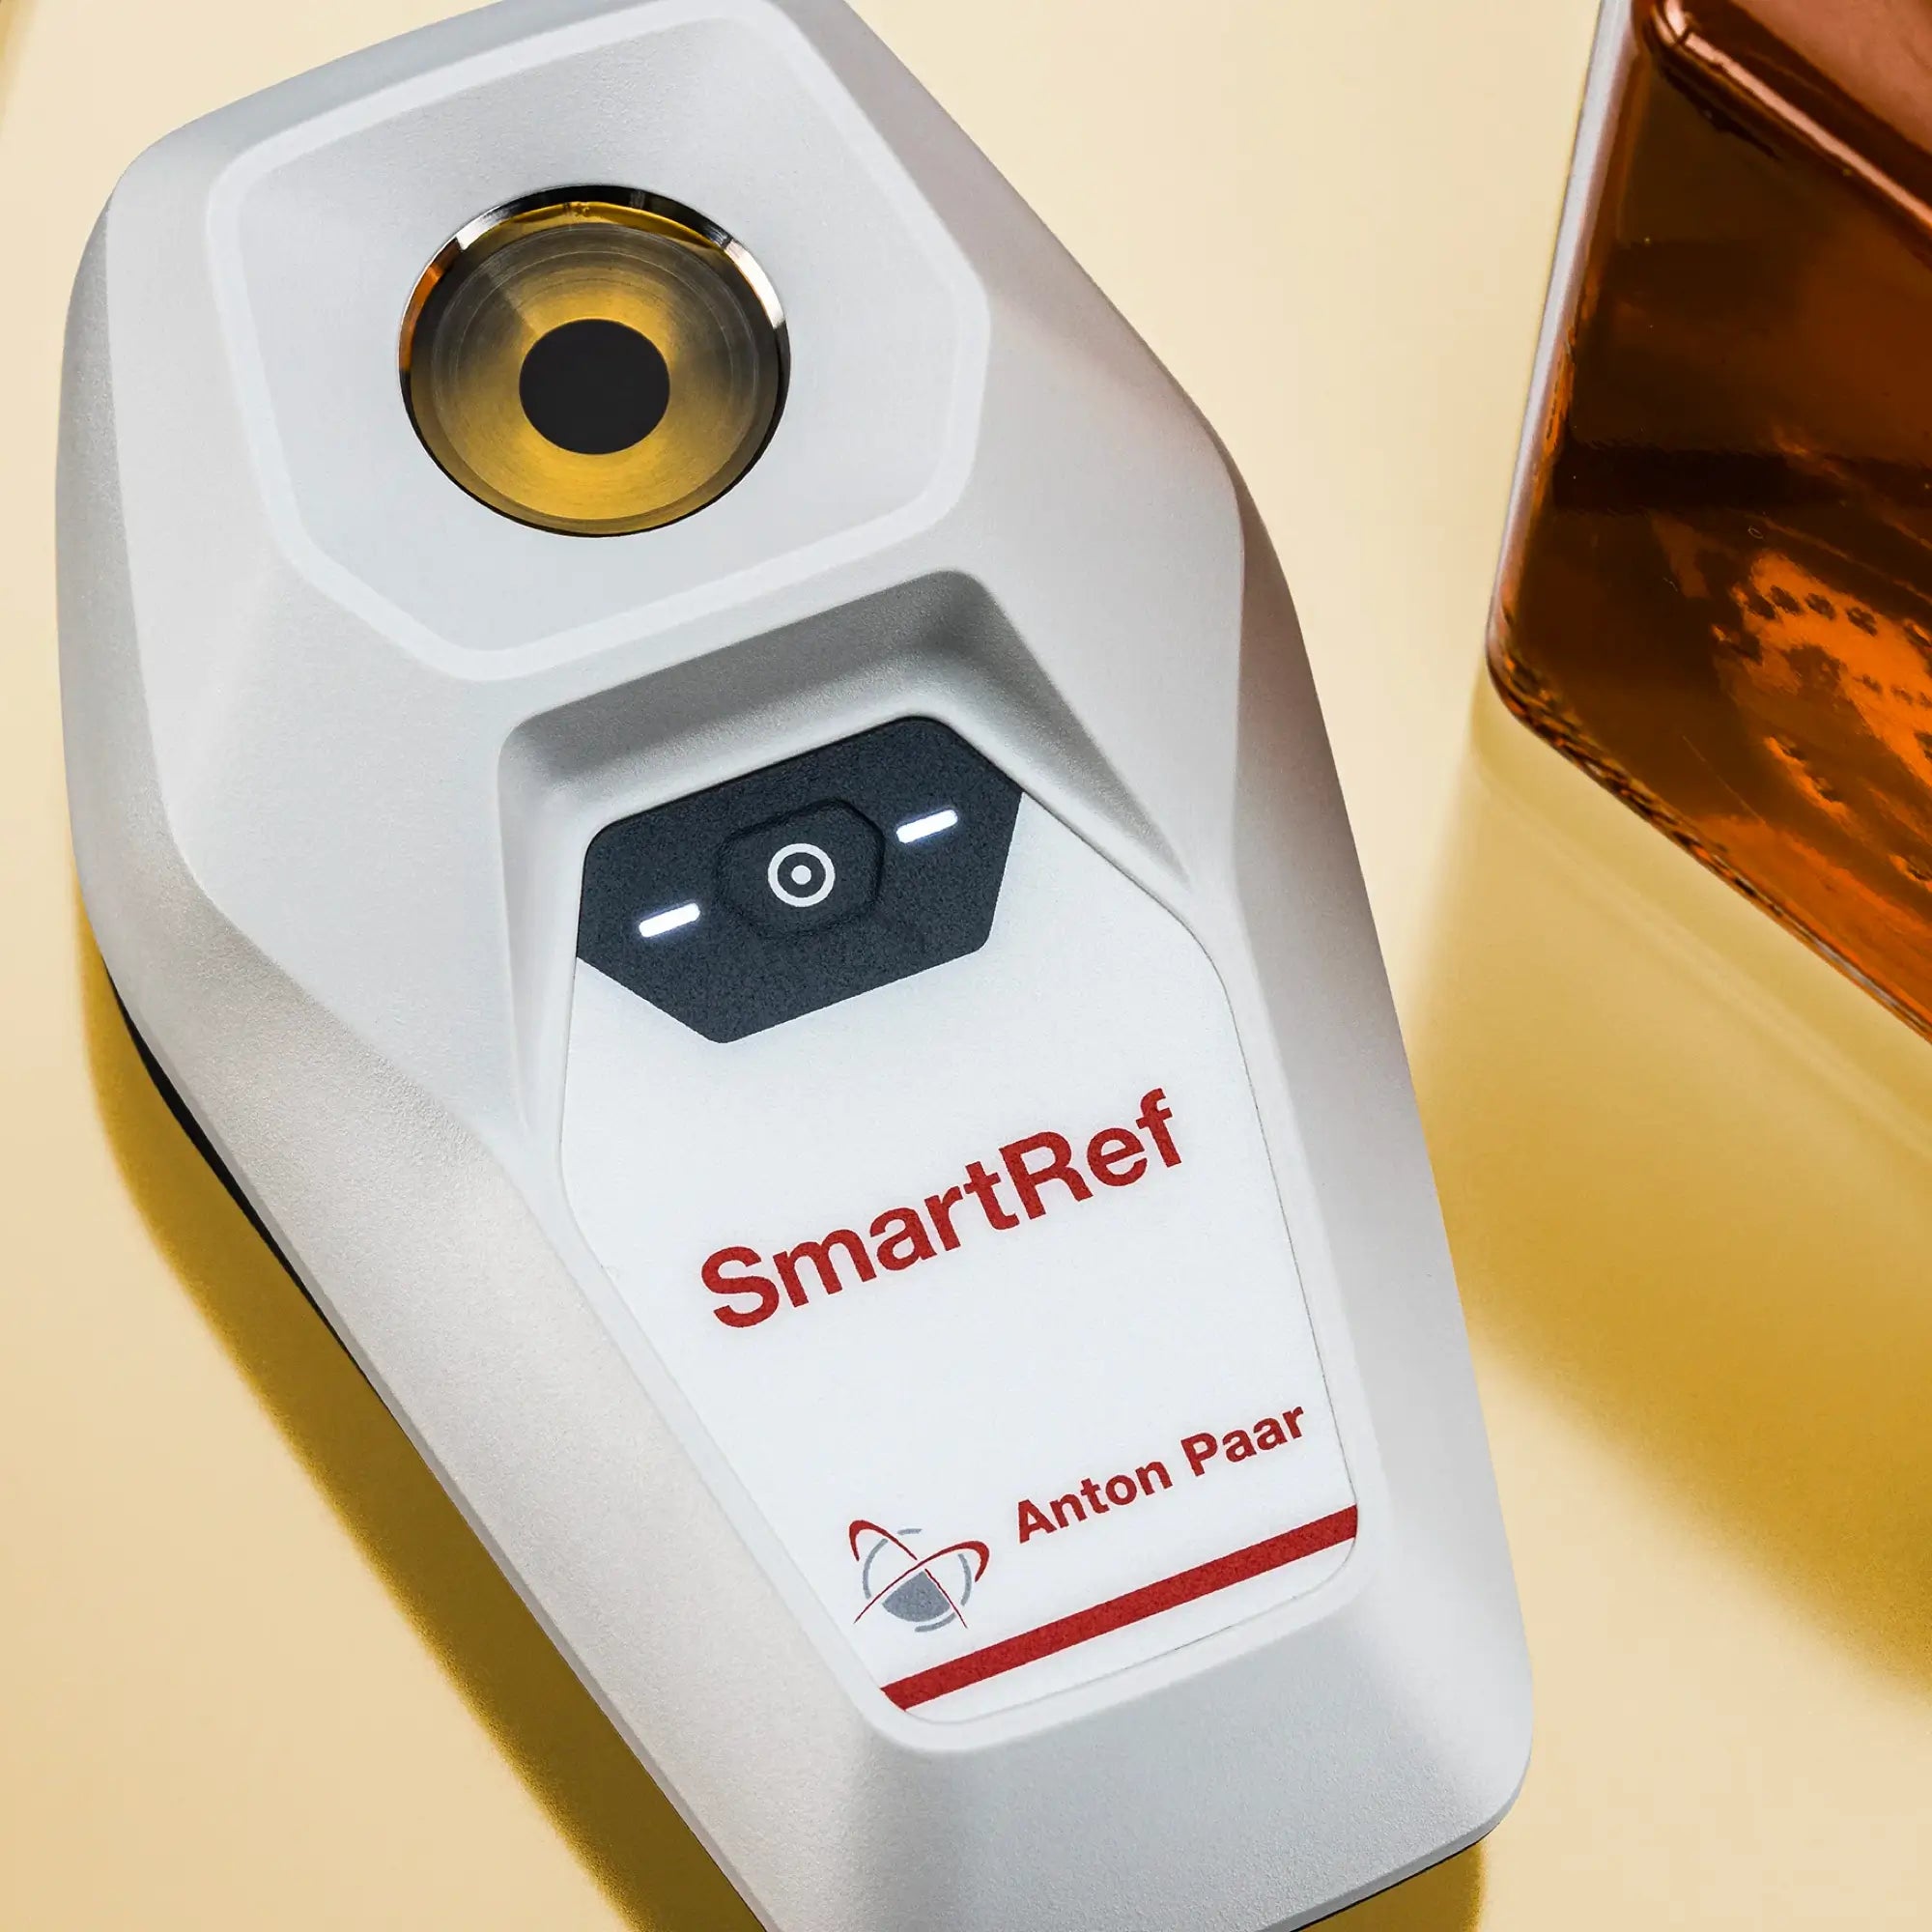 SmartRef Digital Brix Refractometer – AgroGenius